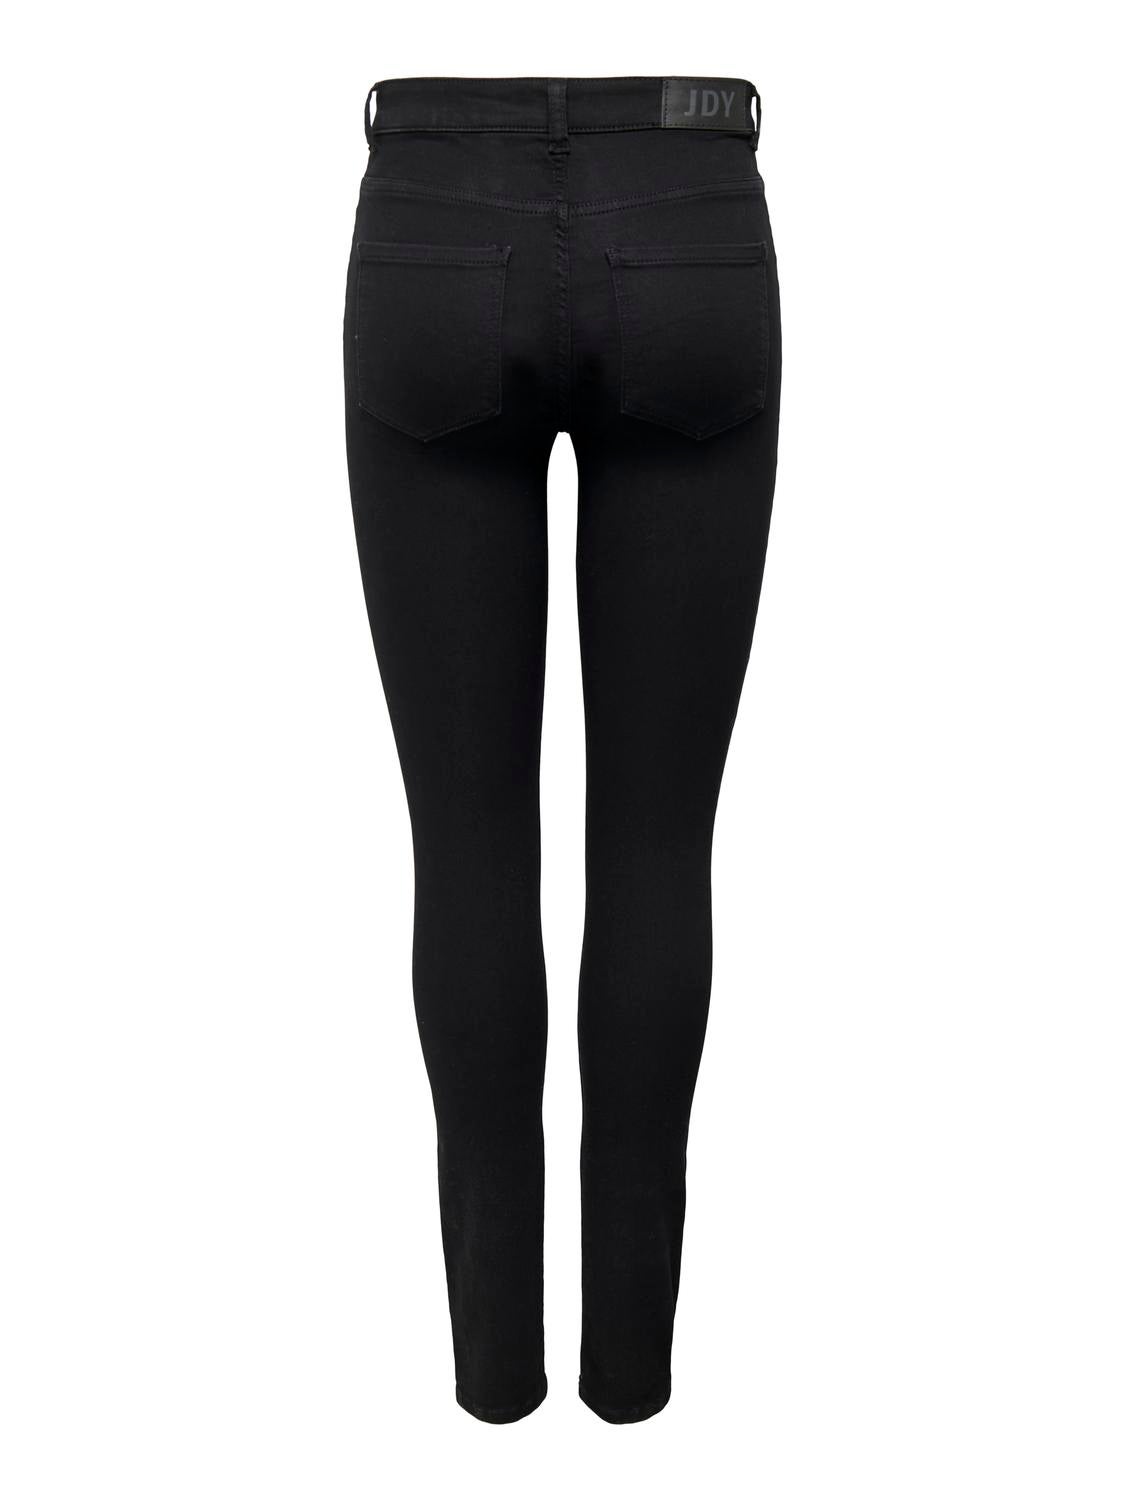 Luchtpost Victor Uluru Tall JDYNewnikki high waisted skinny jeans | Black | ONLY®